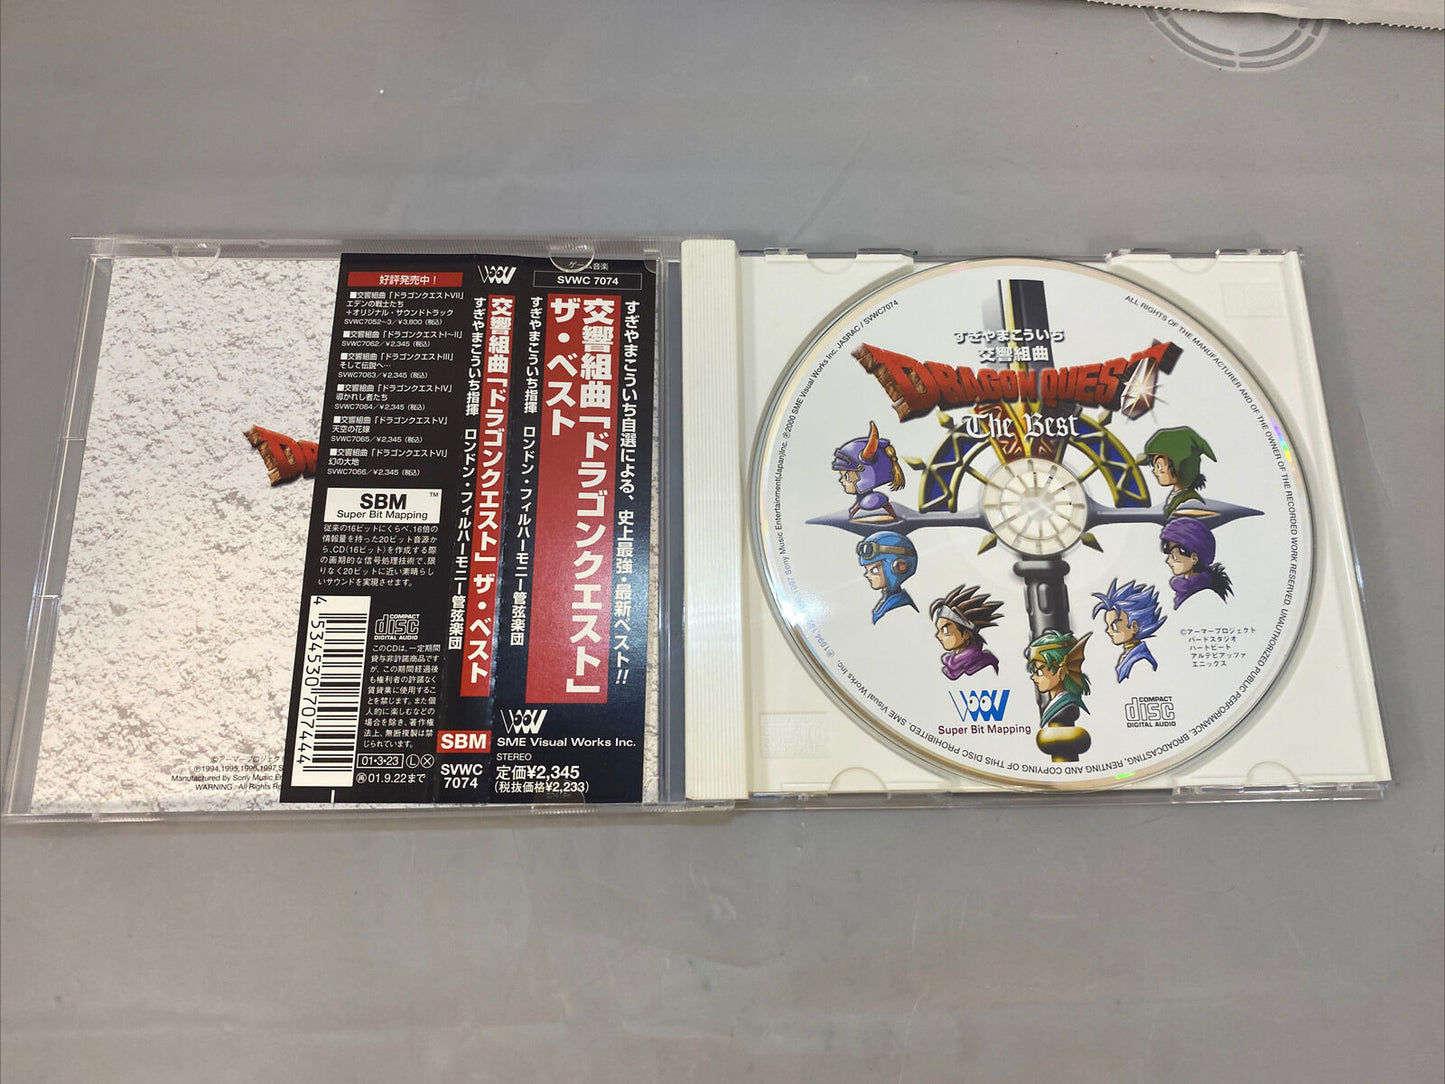 (CD) Dragon Quest: The Best - Ost / Japan Import / SVWC 7074 / Soundtrack w/ obi